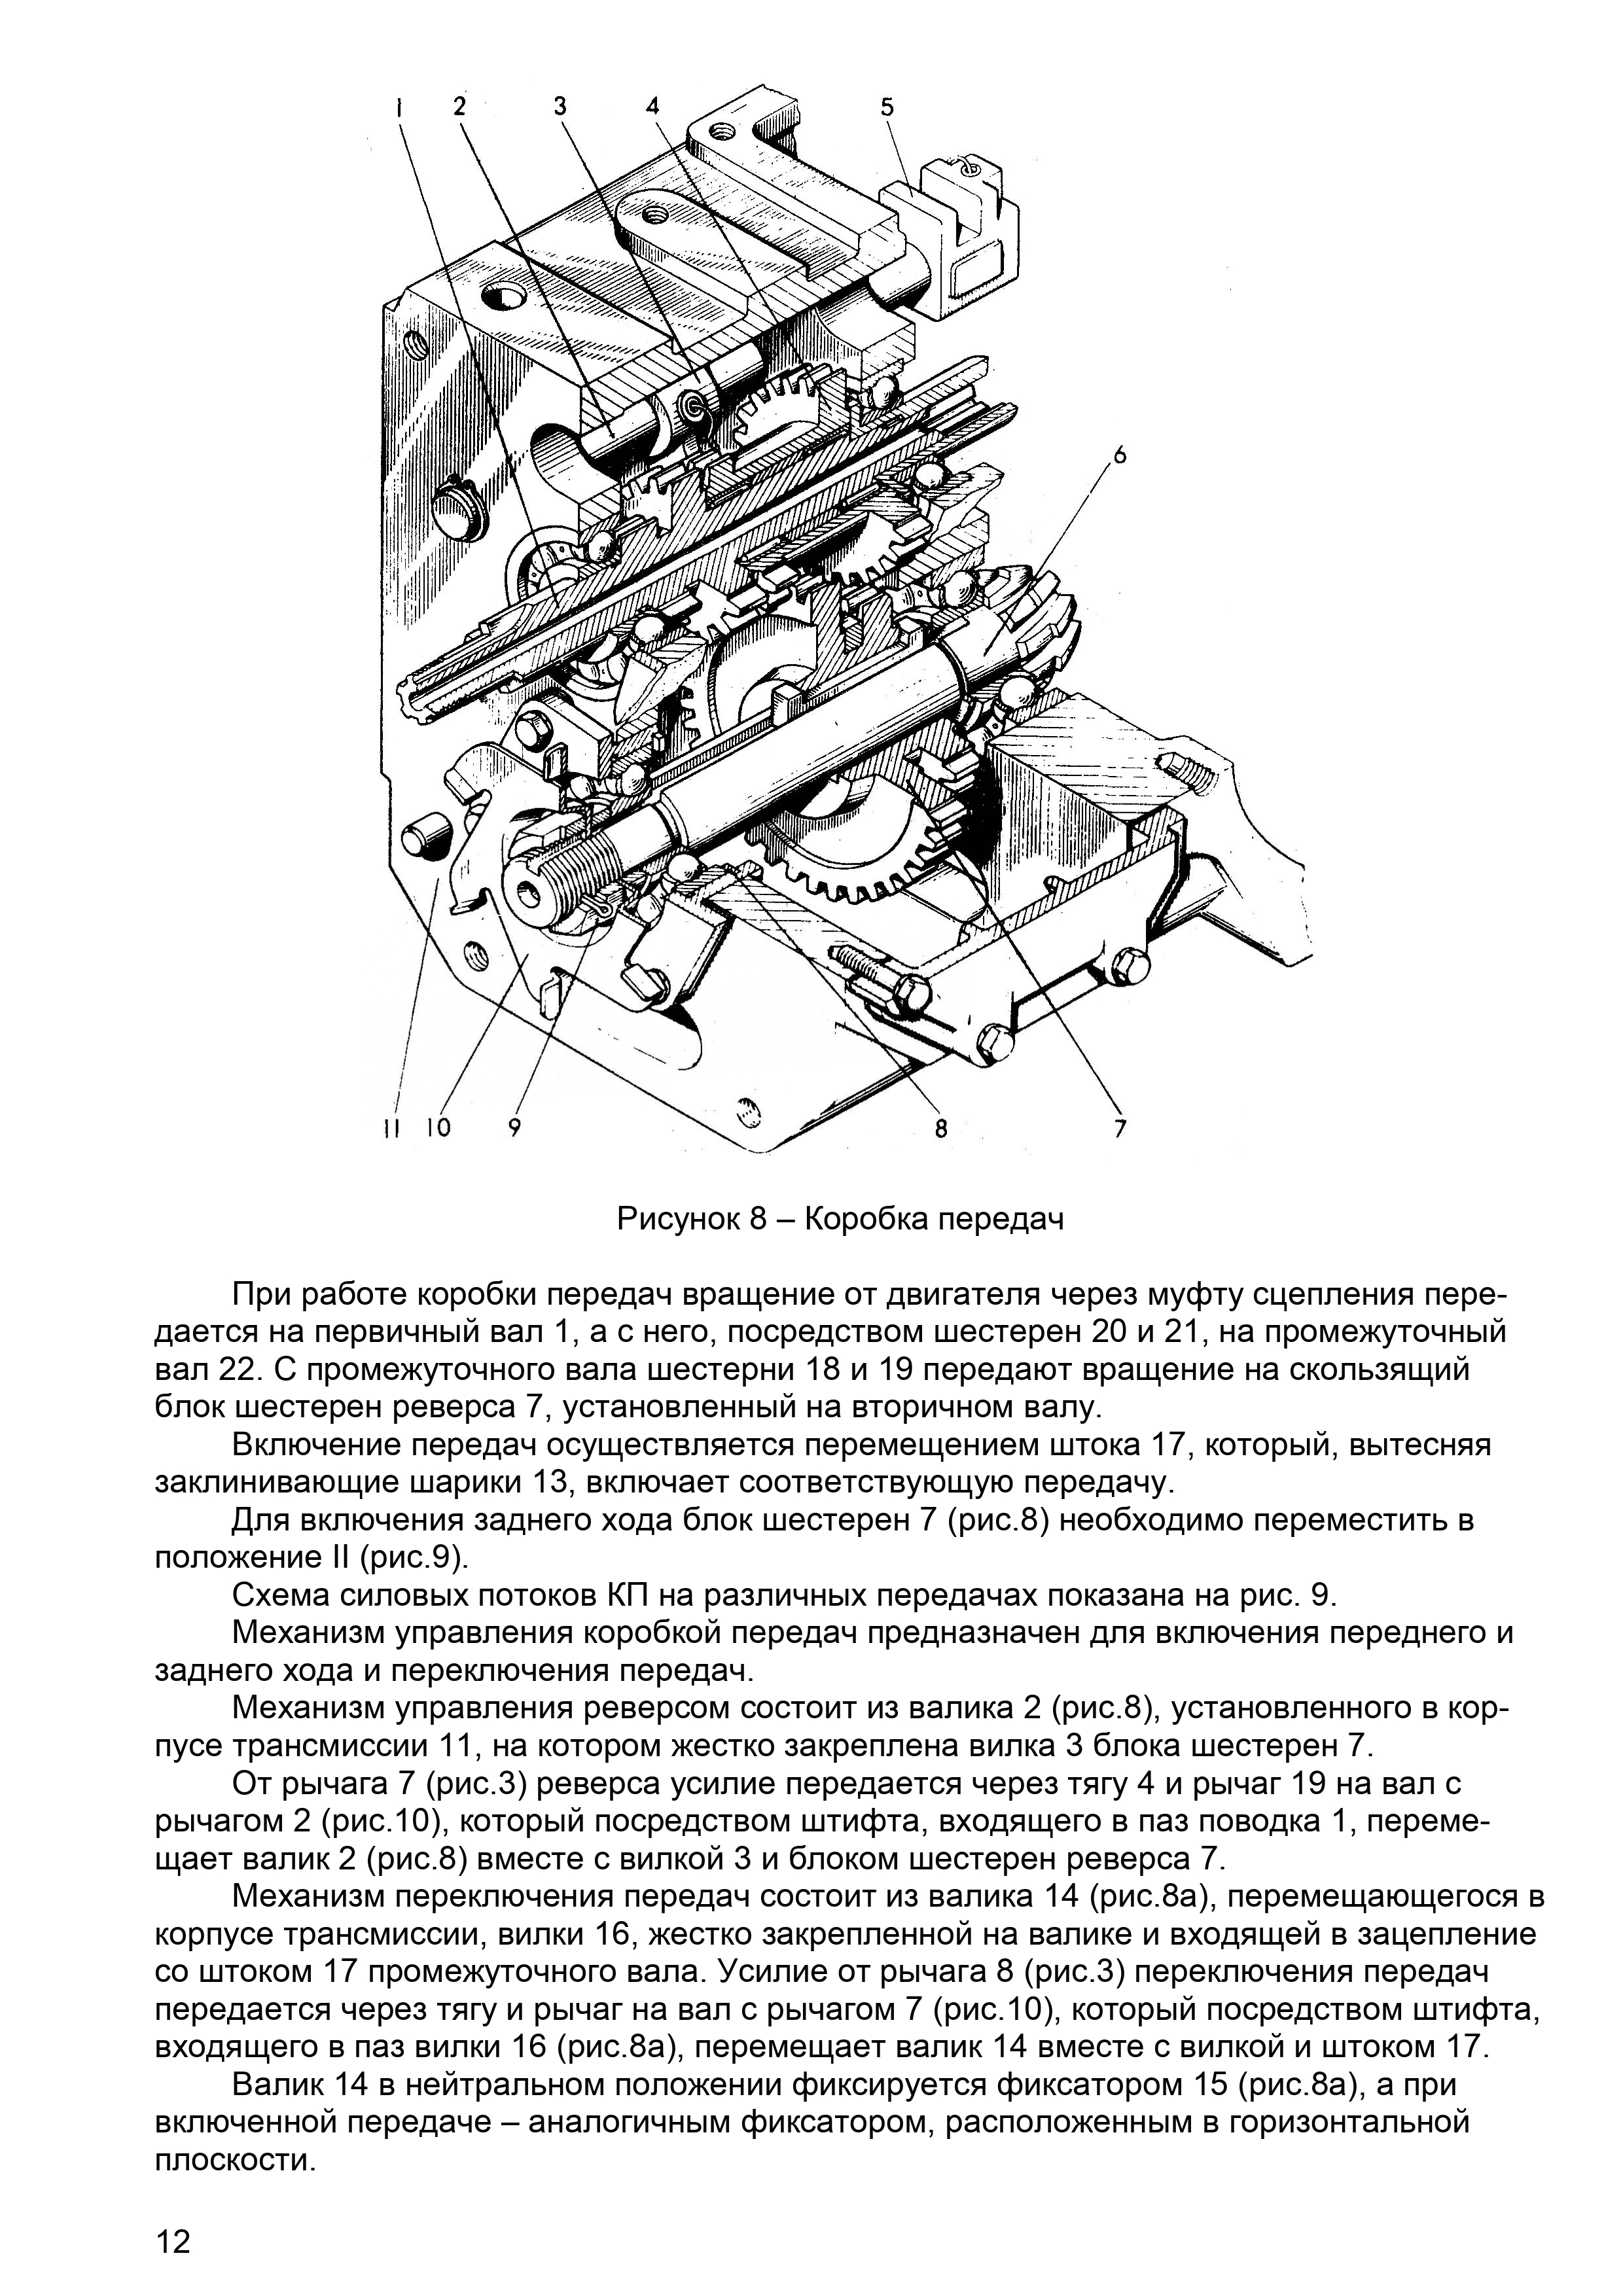 belarus_09h_manual i catalog (1)_page-0012